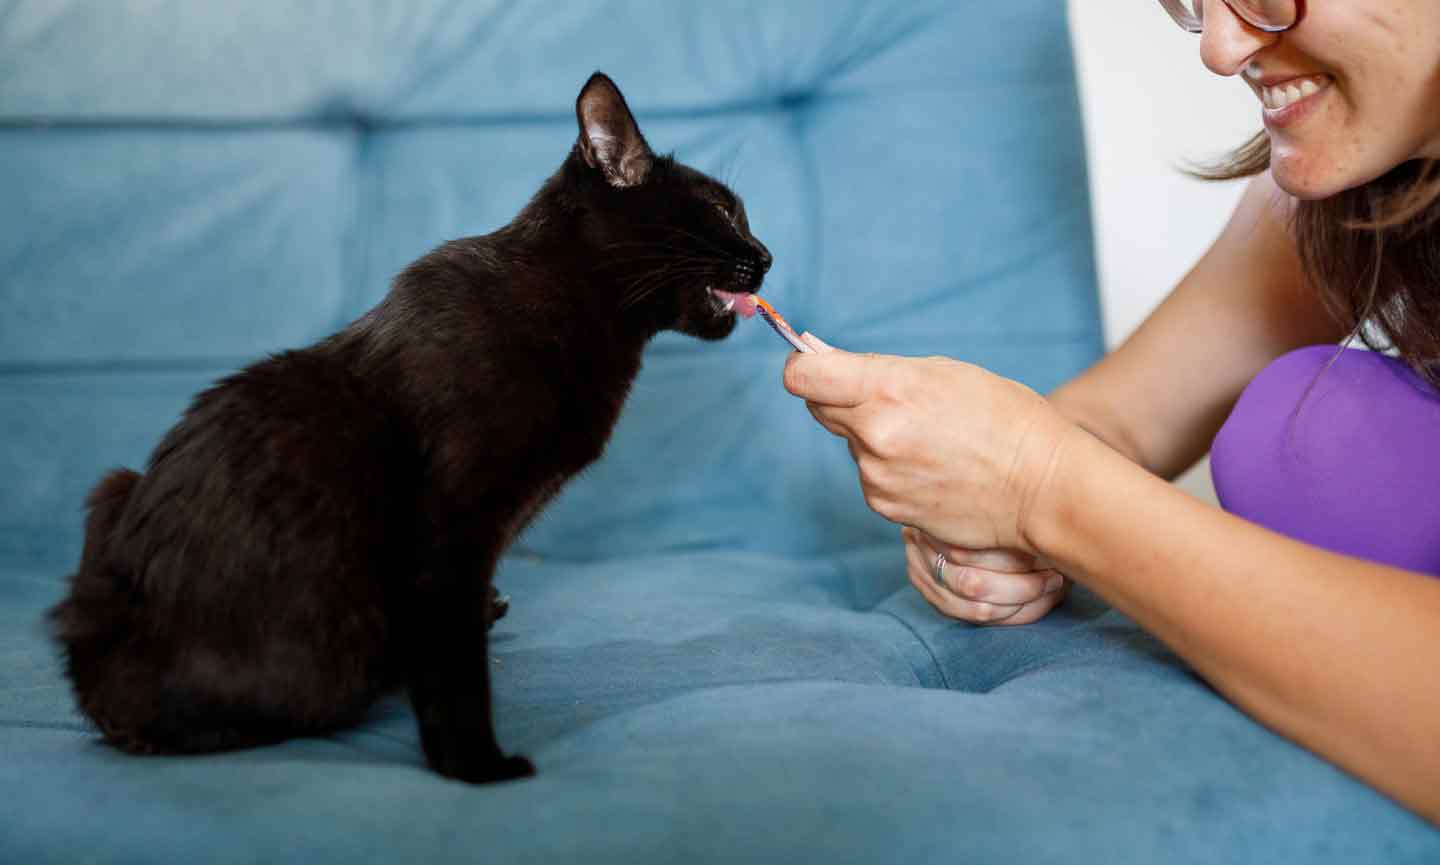 A woman feeding a treat to a black kitten